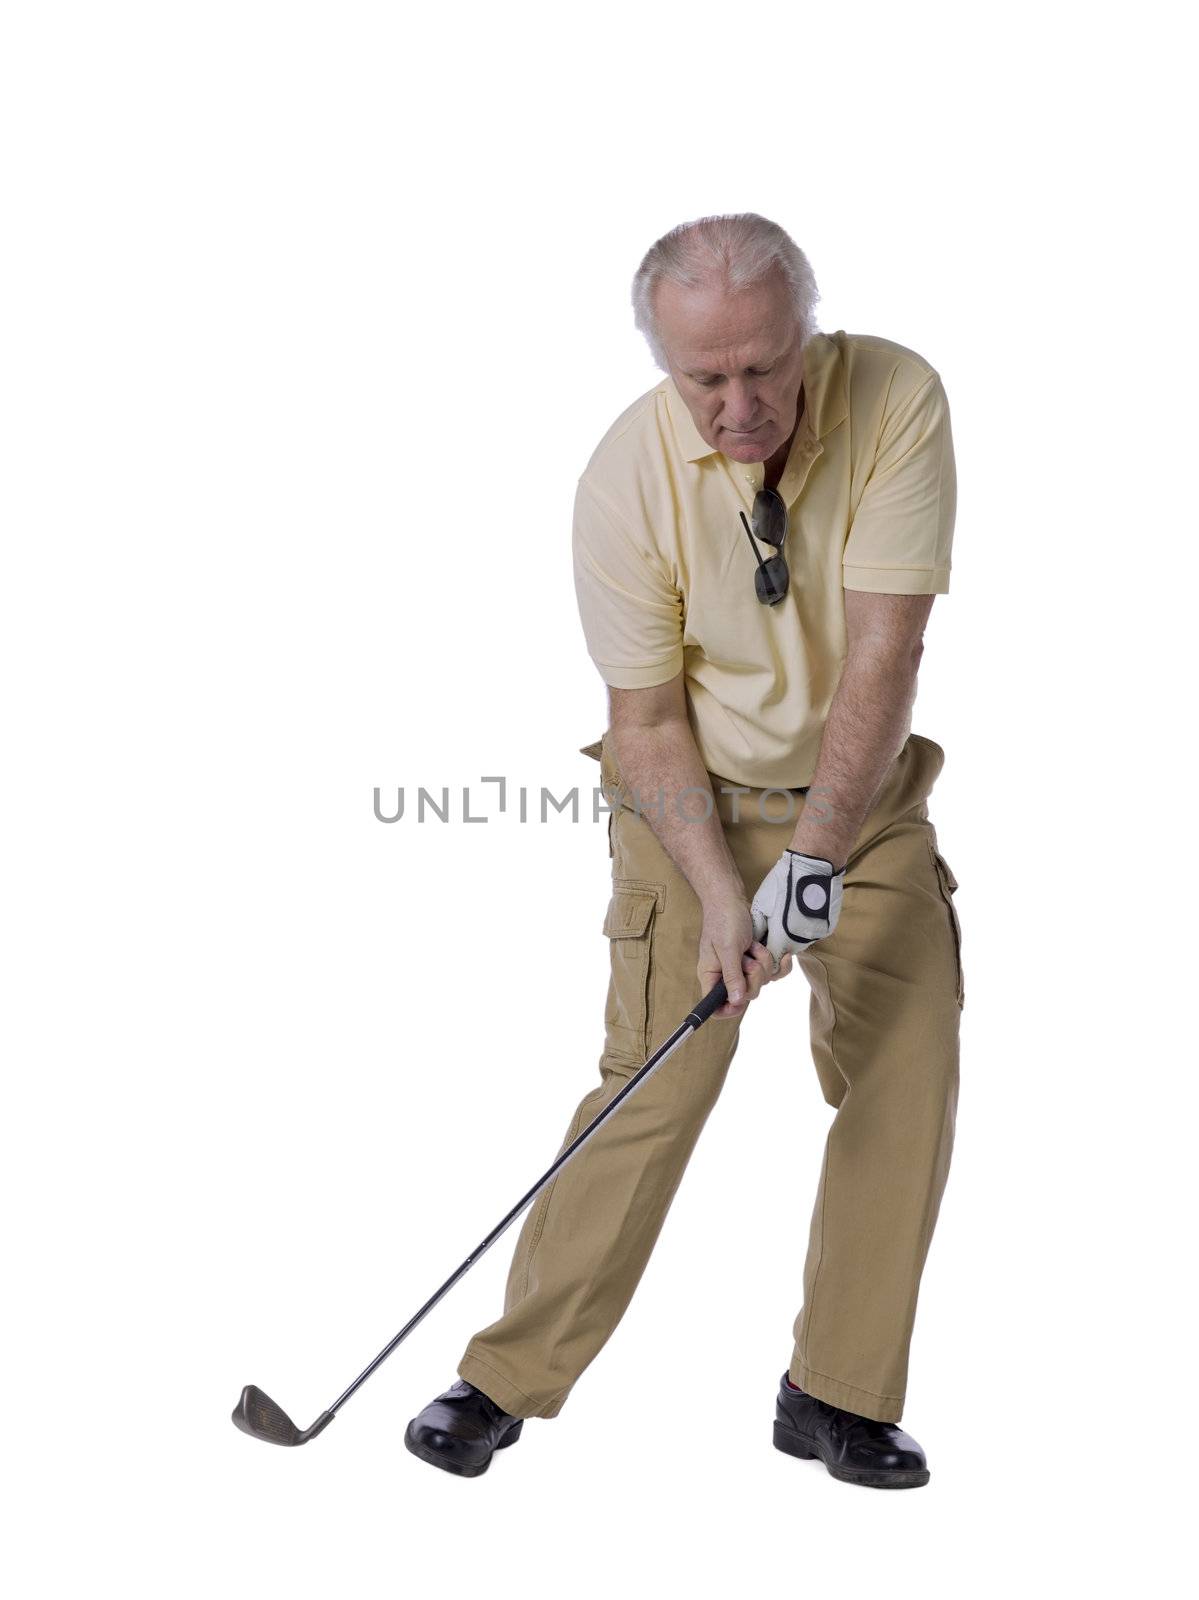 Handsome senior man playing golf